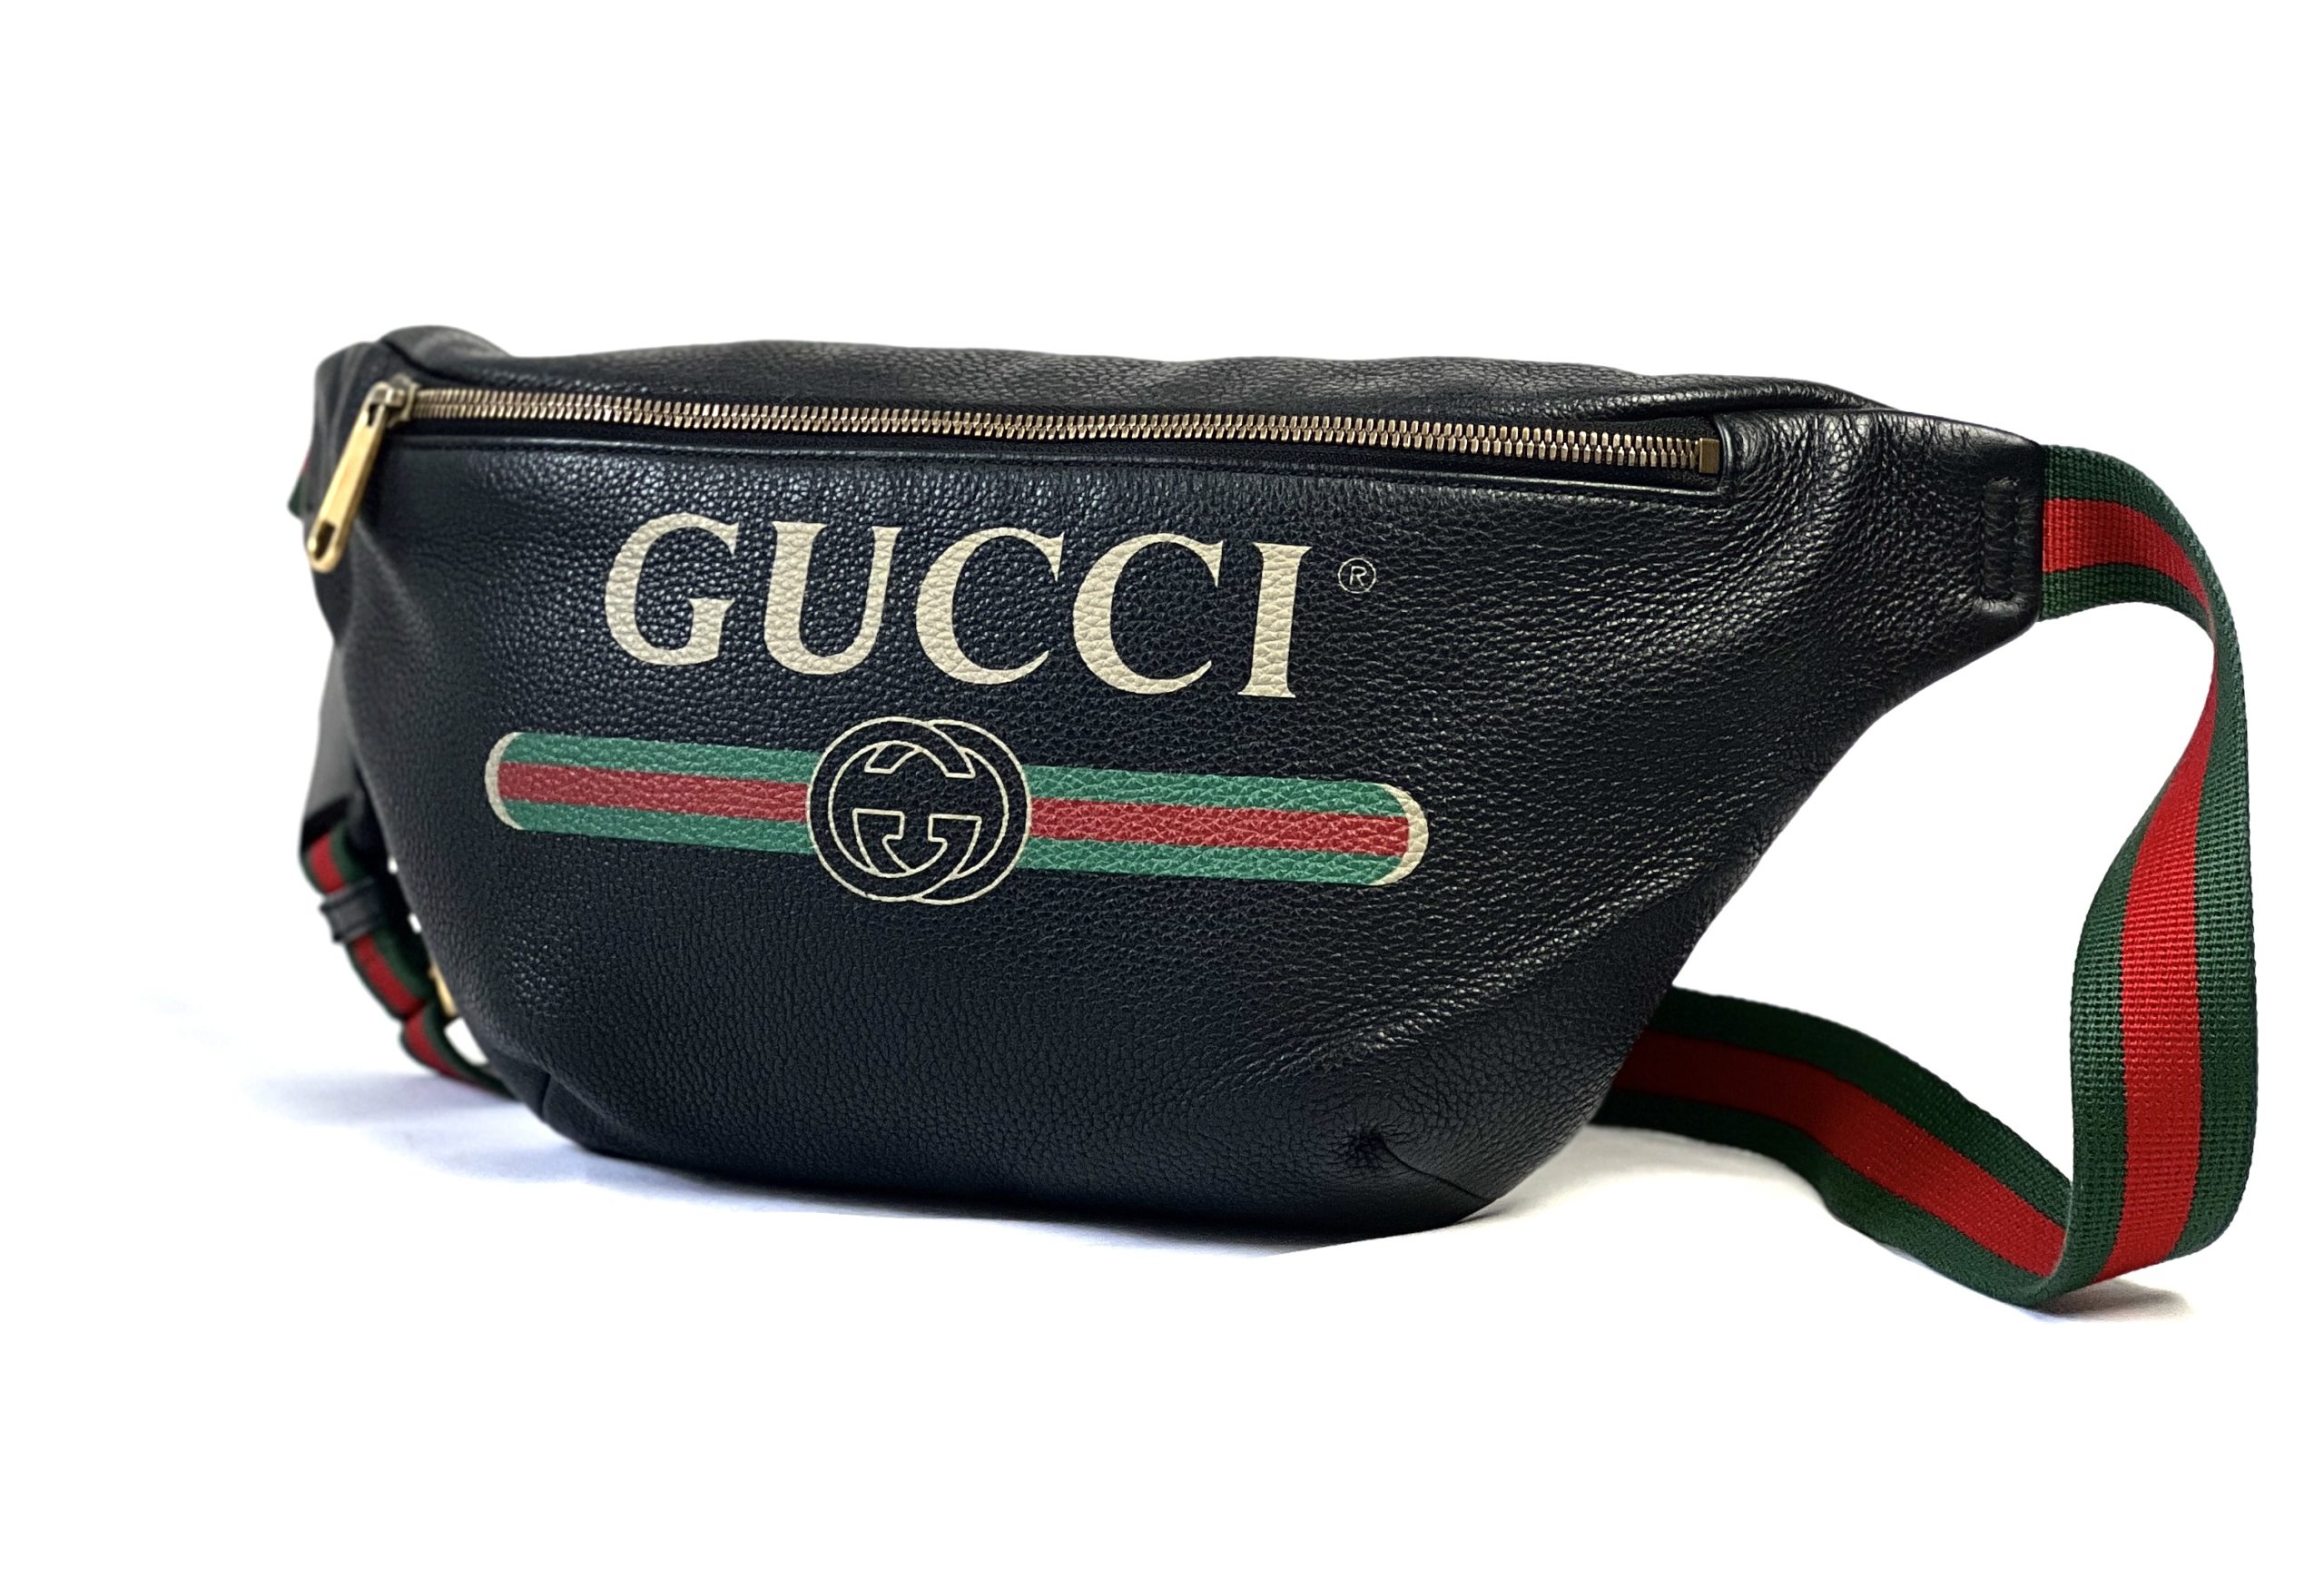 Gucci Waist Bags & Fanny Packs